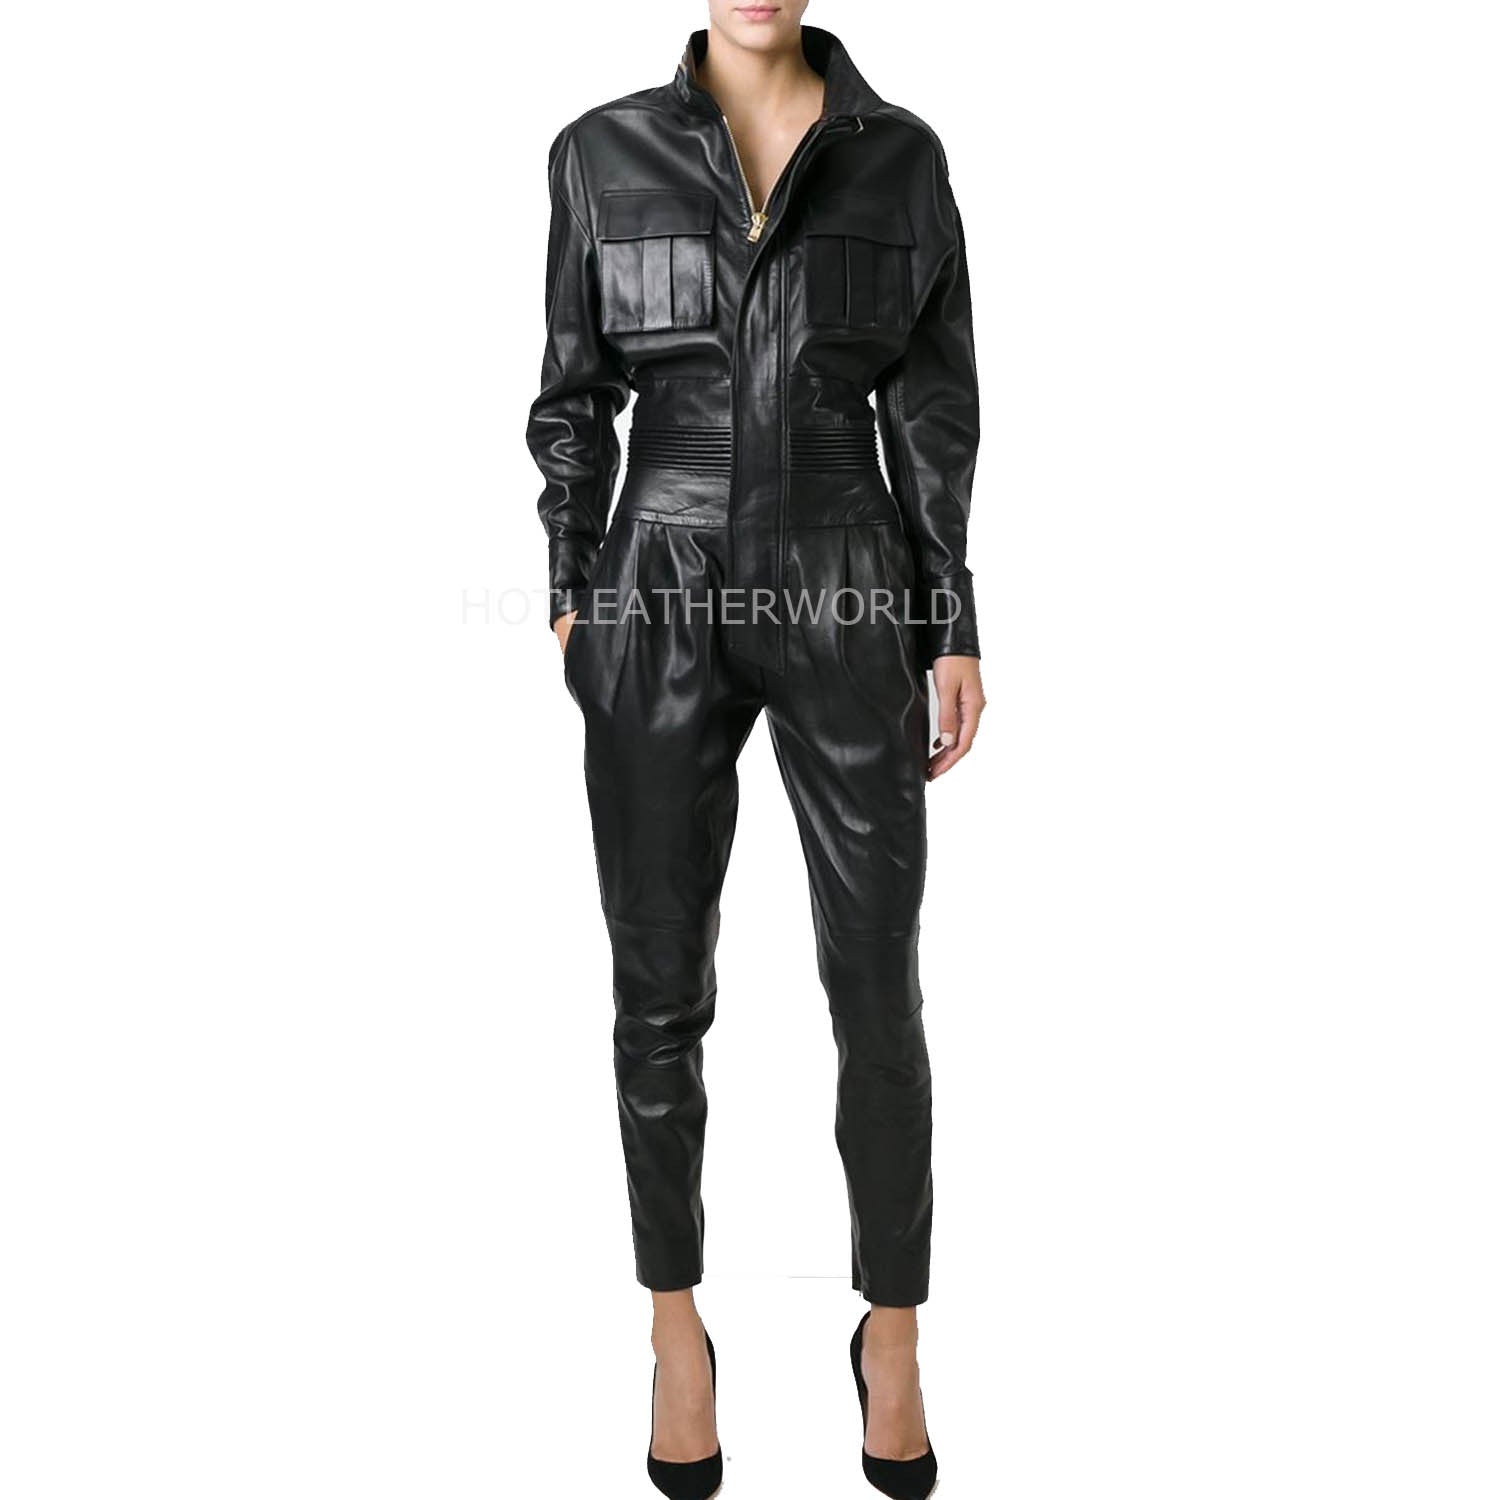 Military Style Women Leather Jumpsuit -  HOTLEATHERWORLD